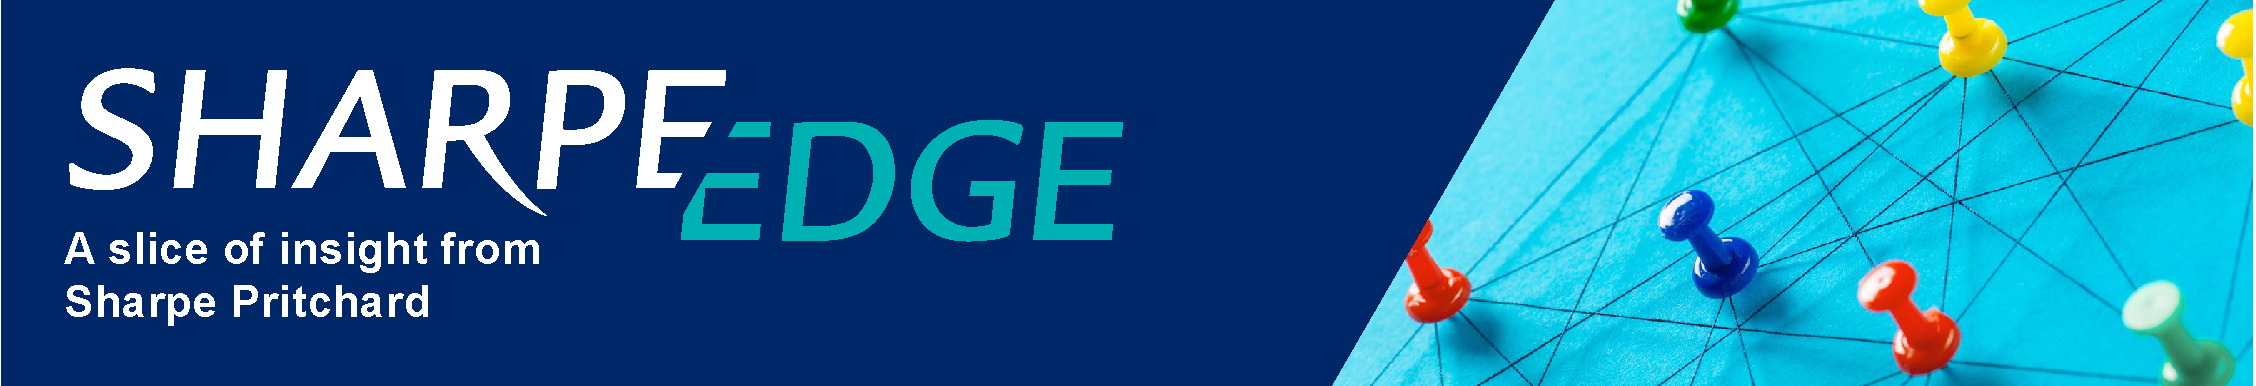 Sharpe Edge Webpage Banner